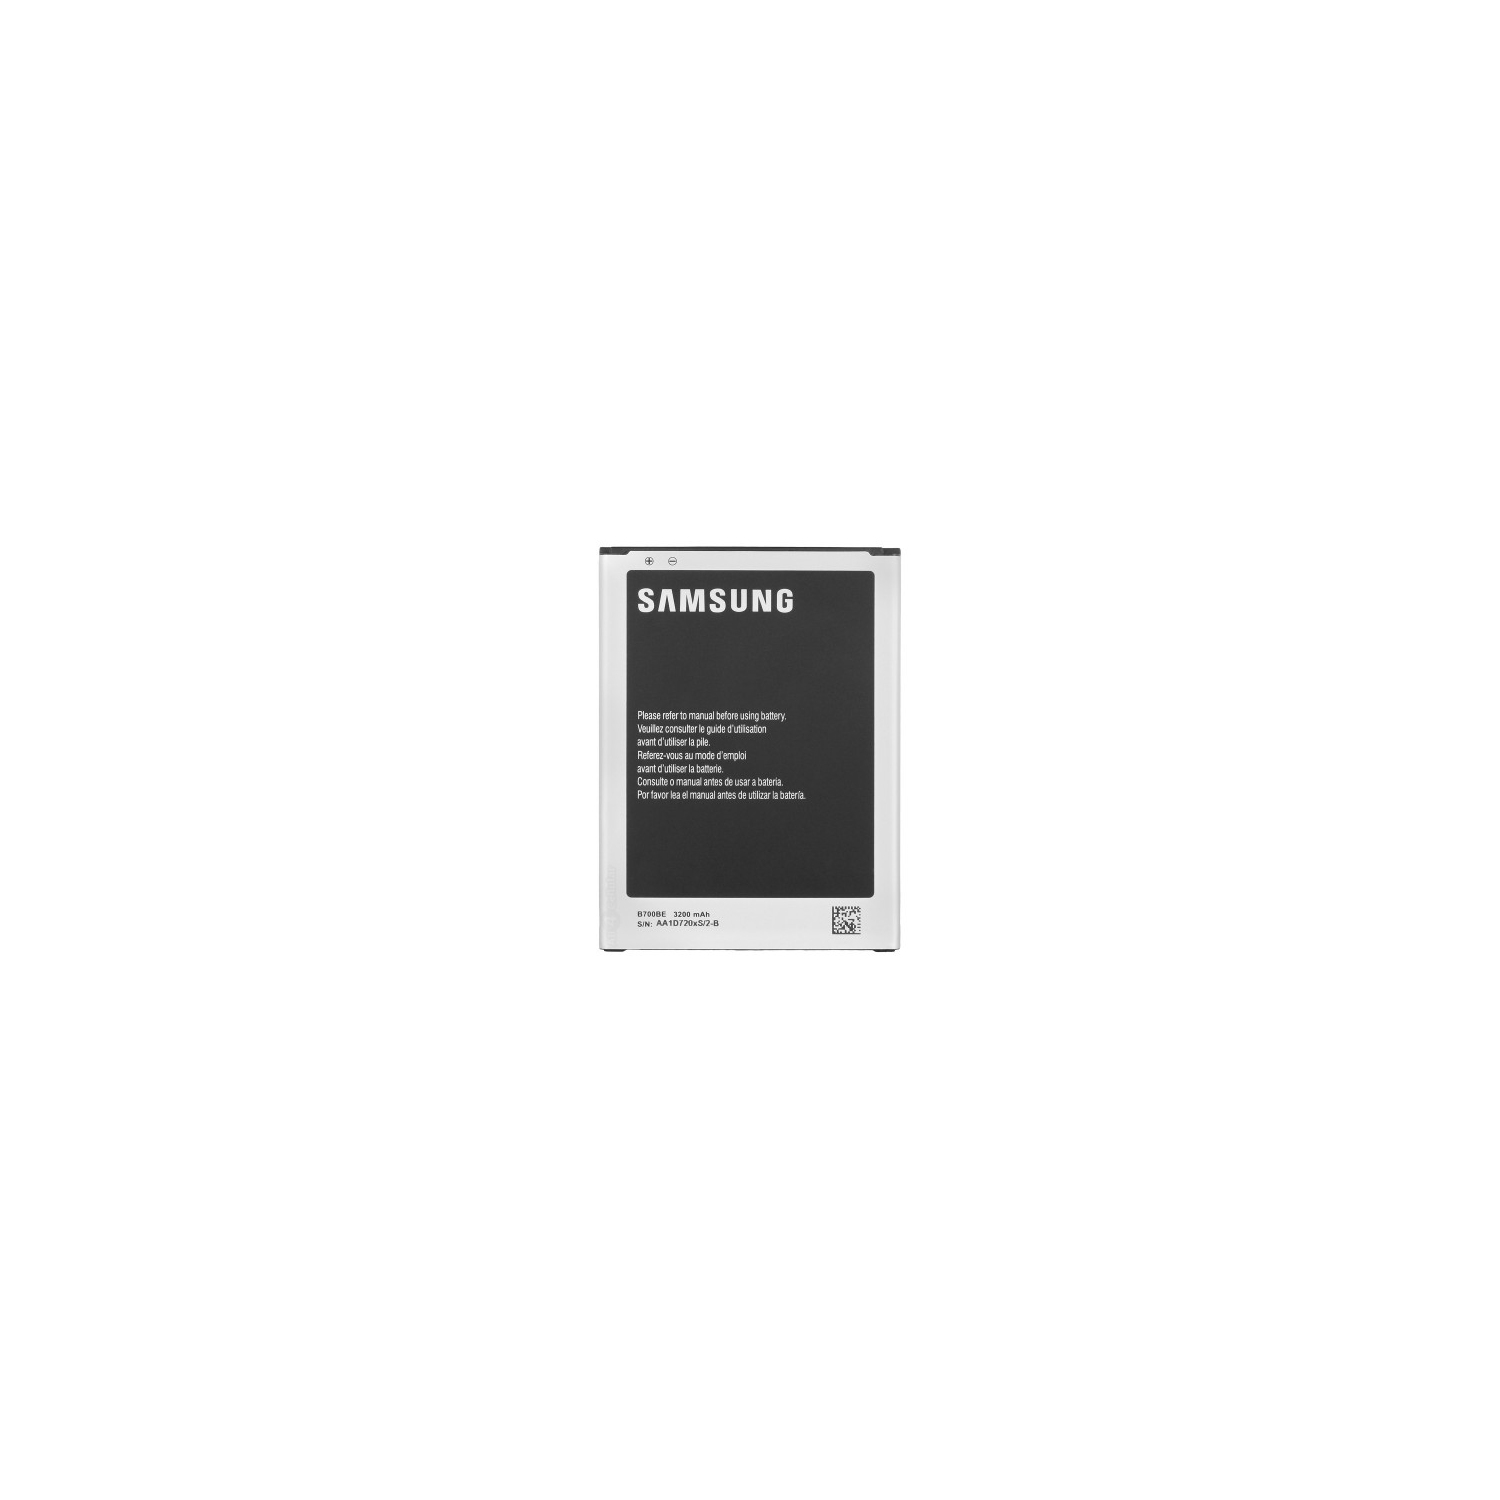 Samsung Galaxy Mega 6.3 Replacement Battery with NFC, i527 i9205 i9208 B700BU / B700BE